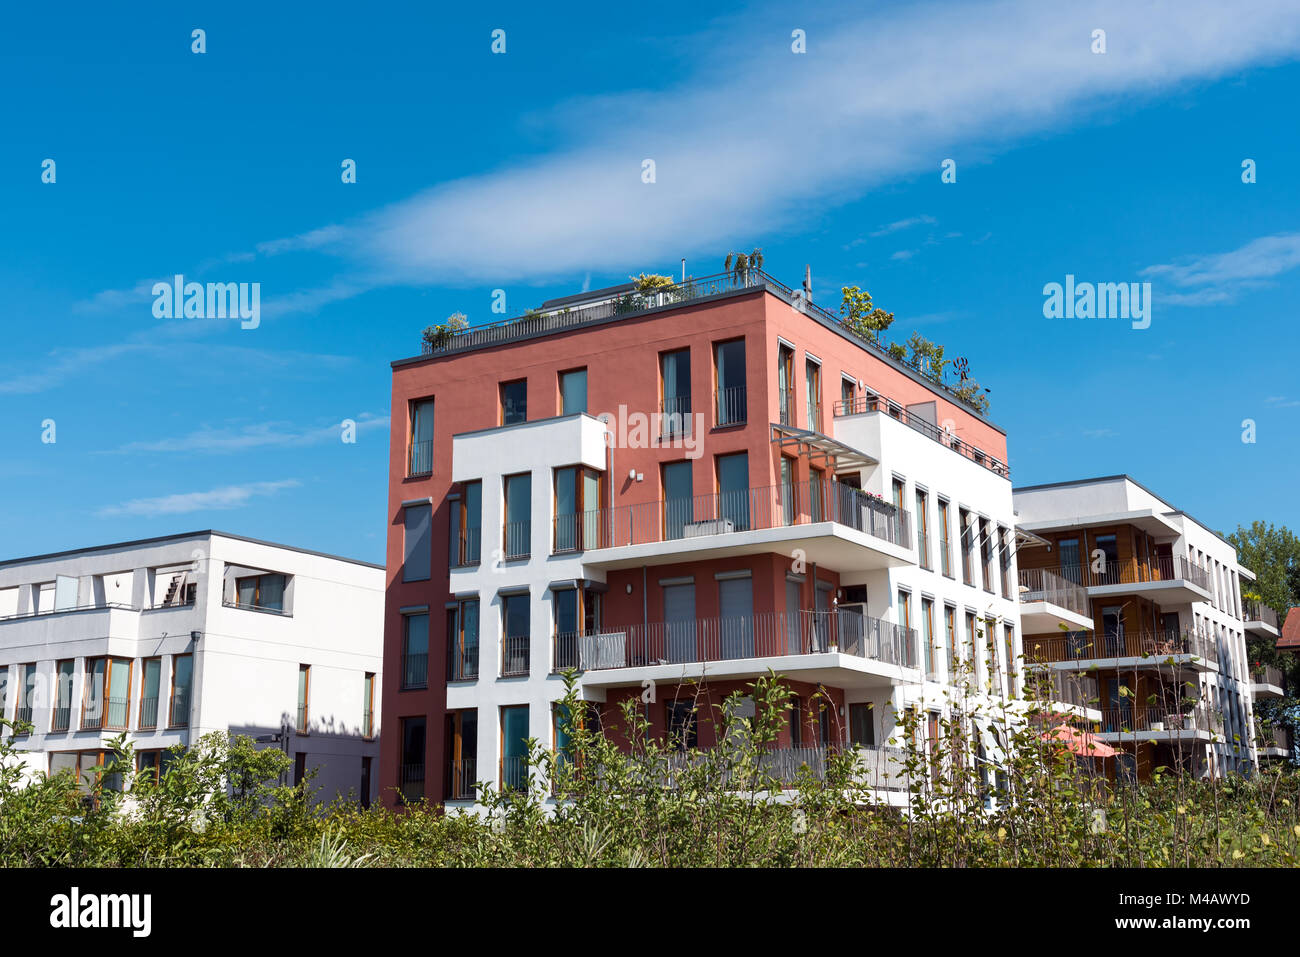 Modern townhouses seen in Berlin, Germany Stock Photo